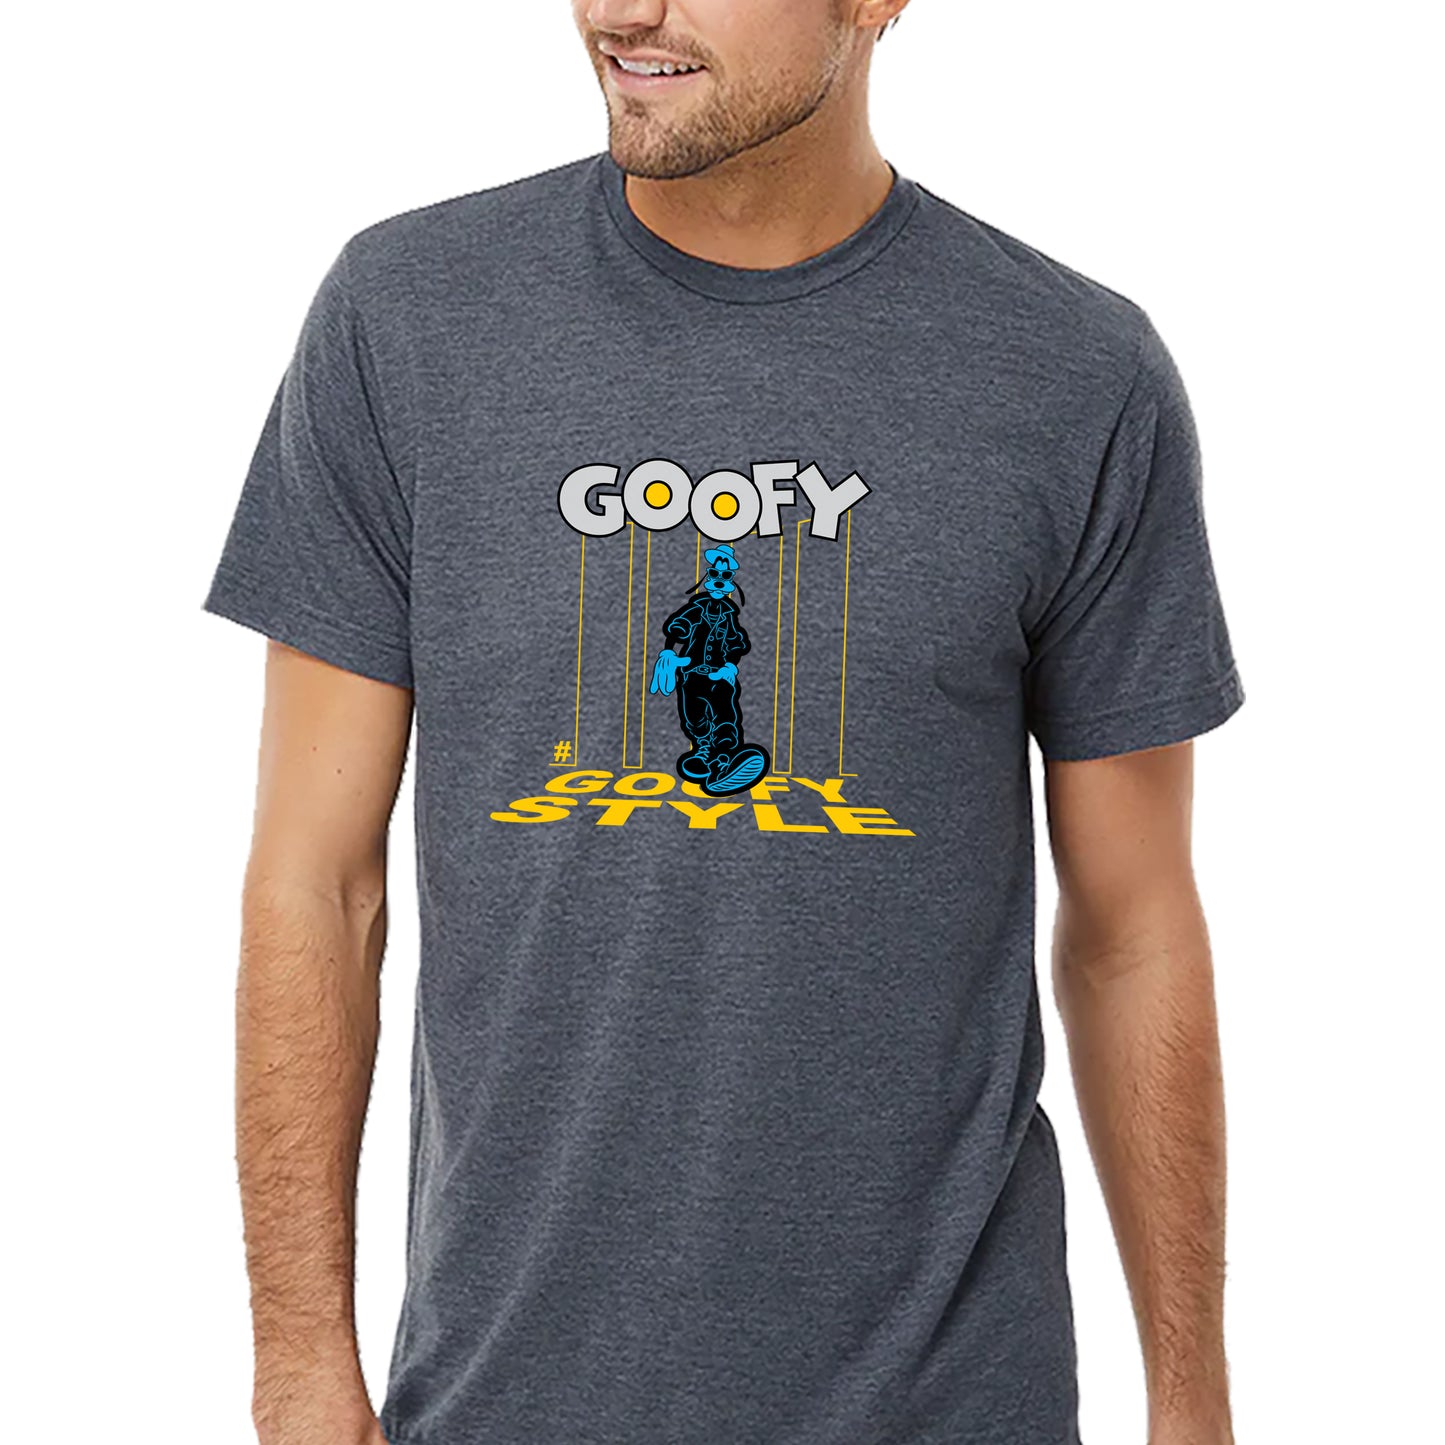 Goofy Style T-shirt